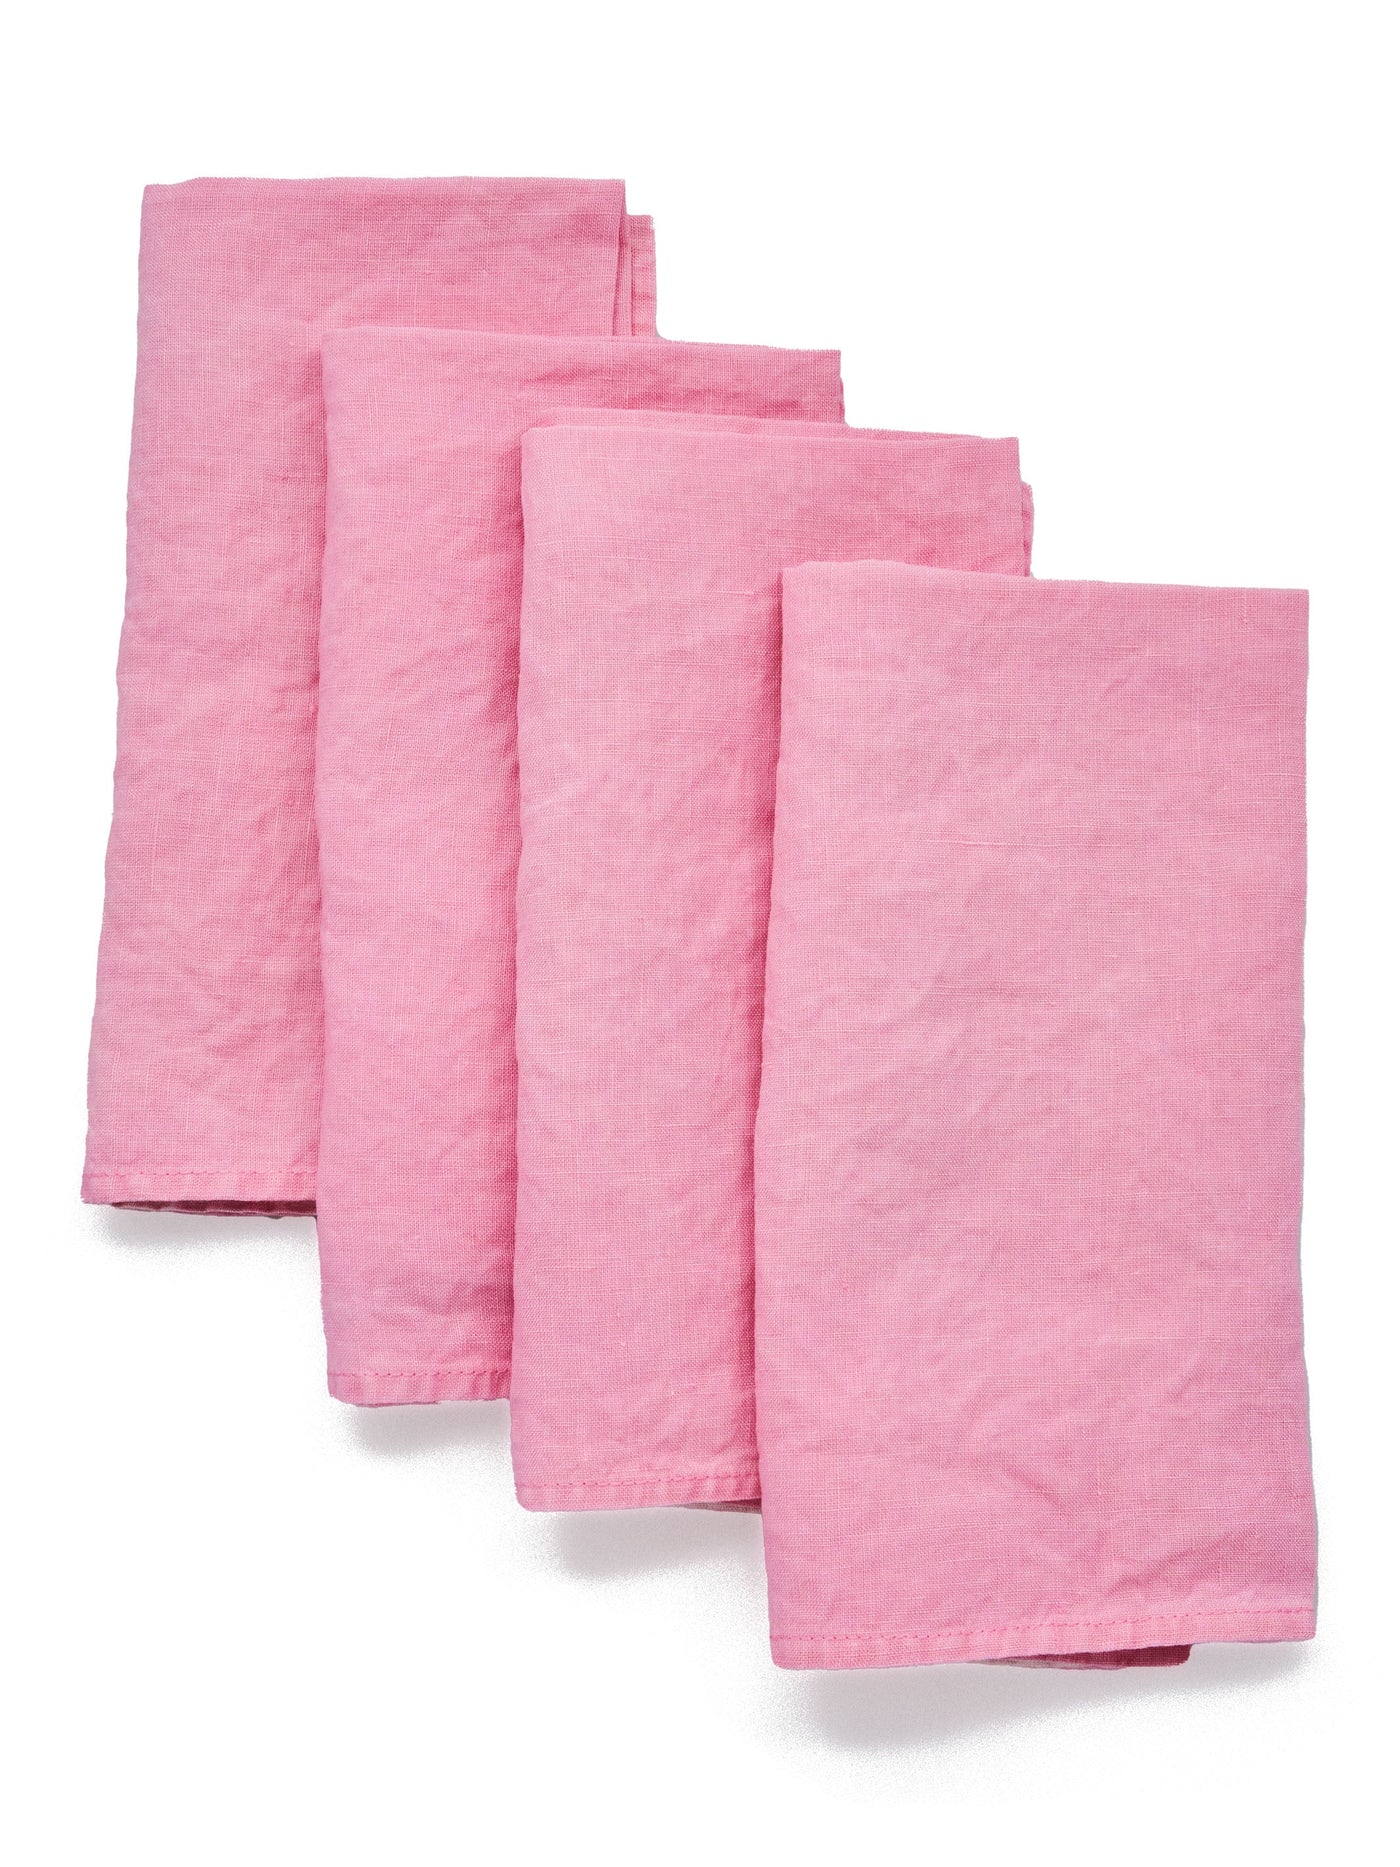 100% Italian Linen Napkin Set of Four in Pink by Bertozzi